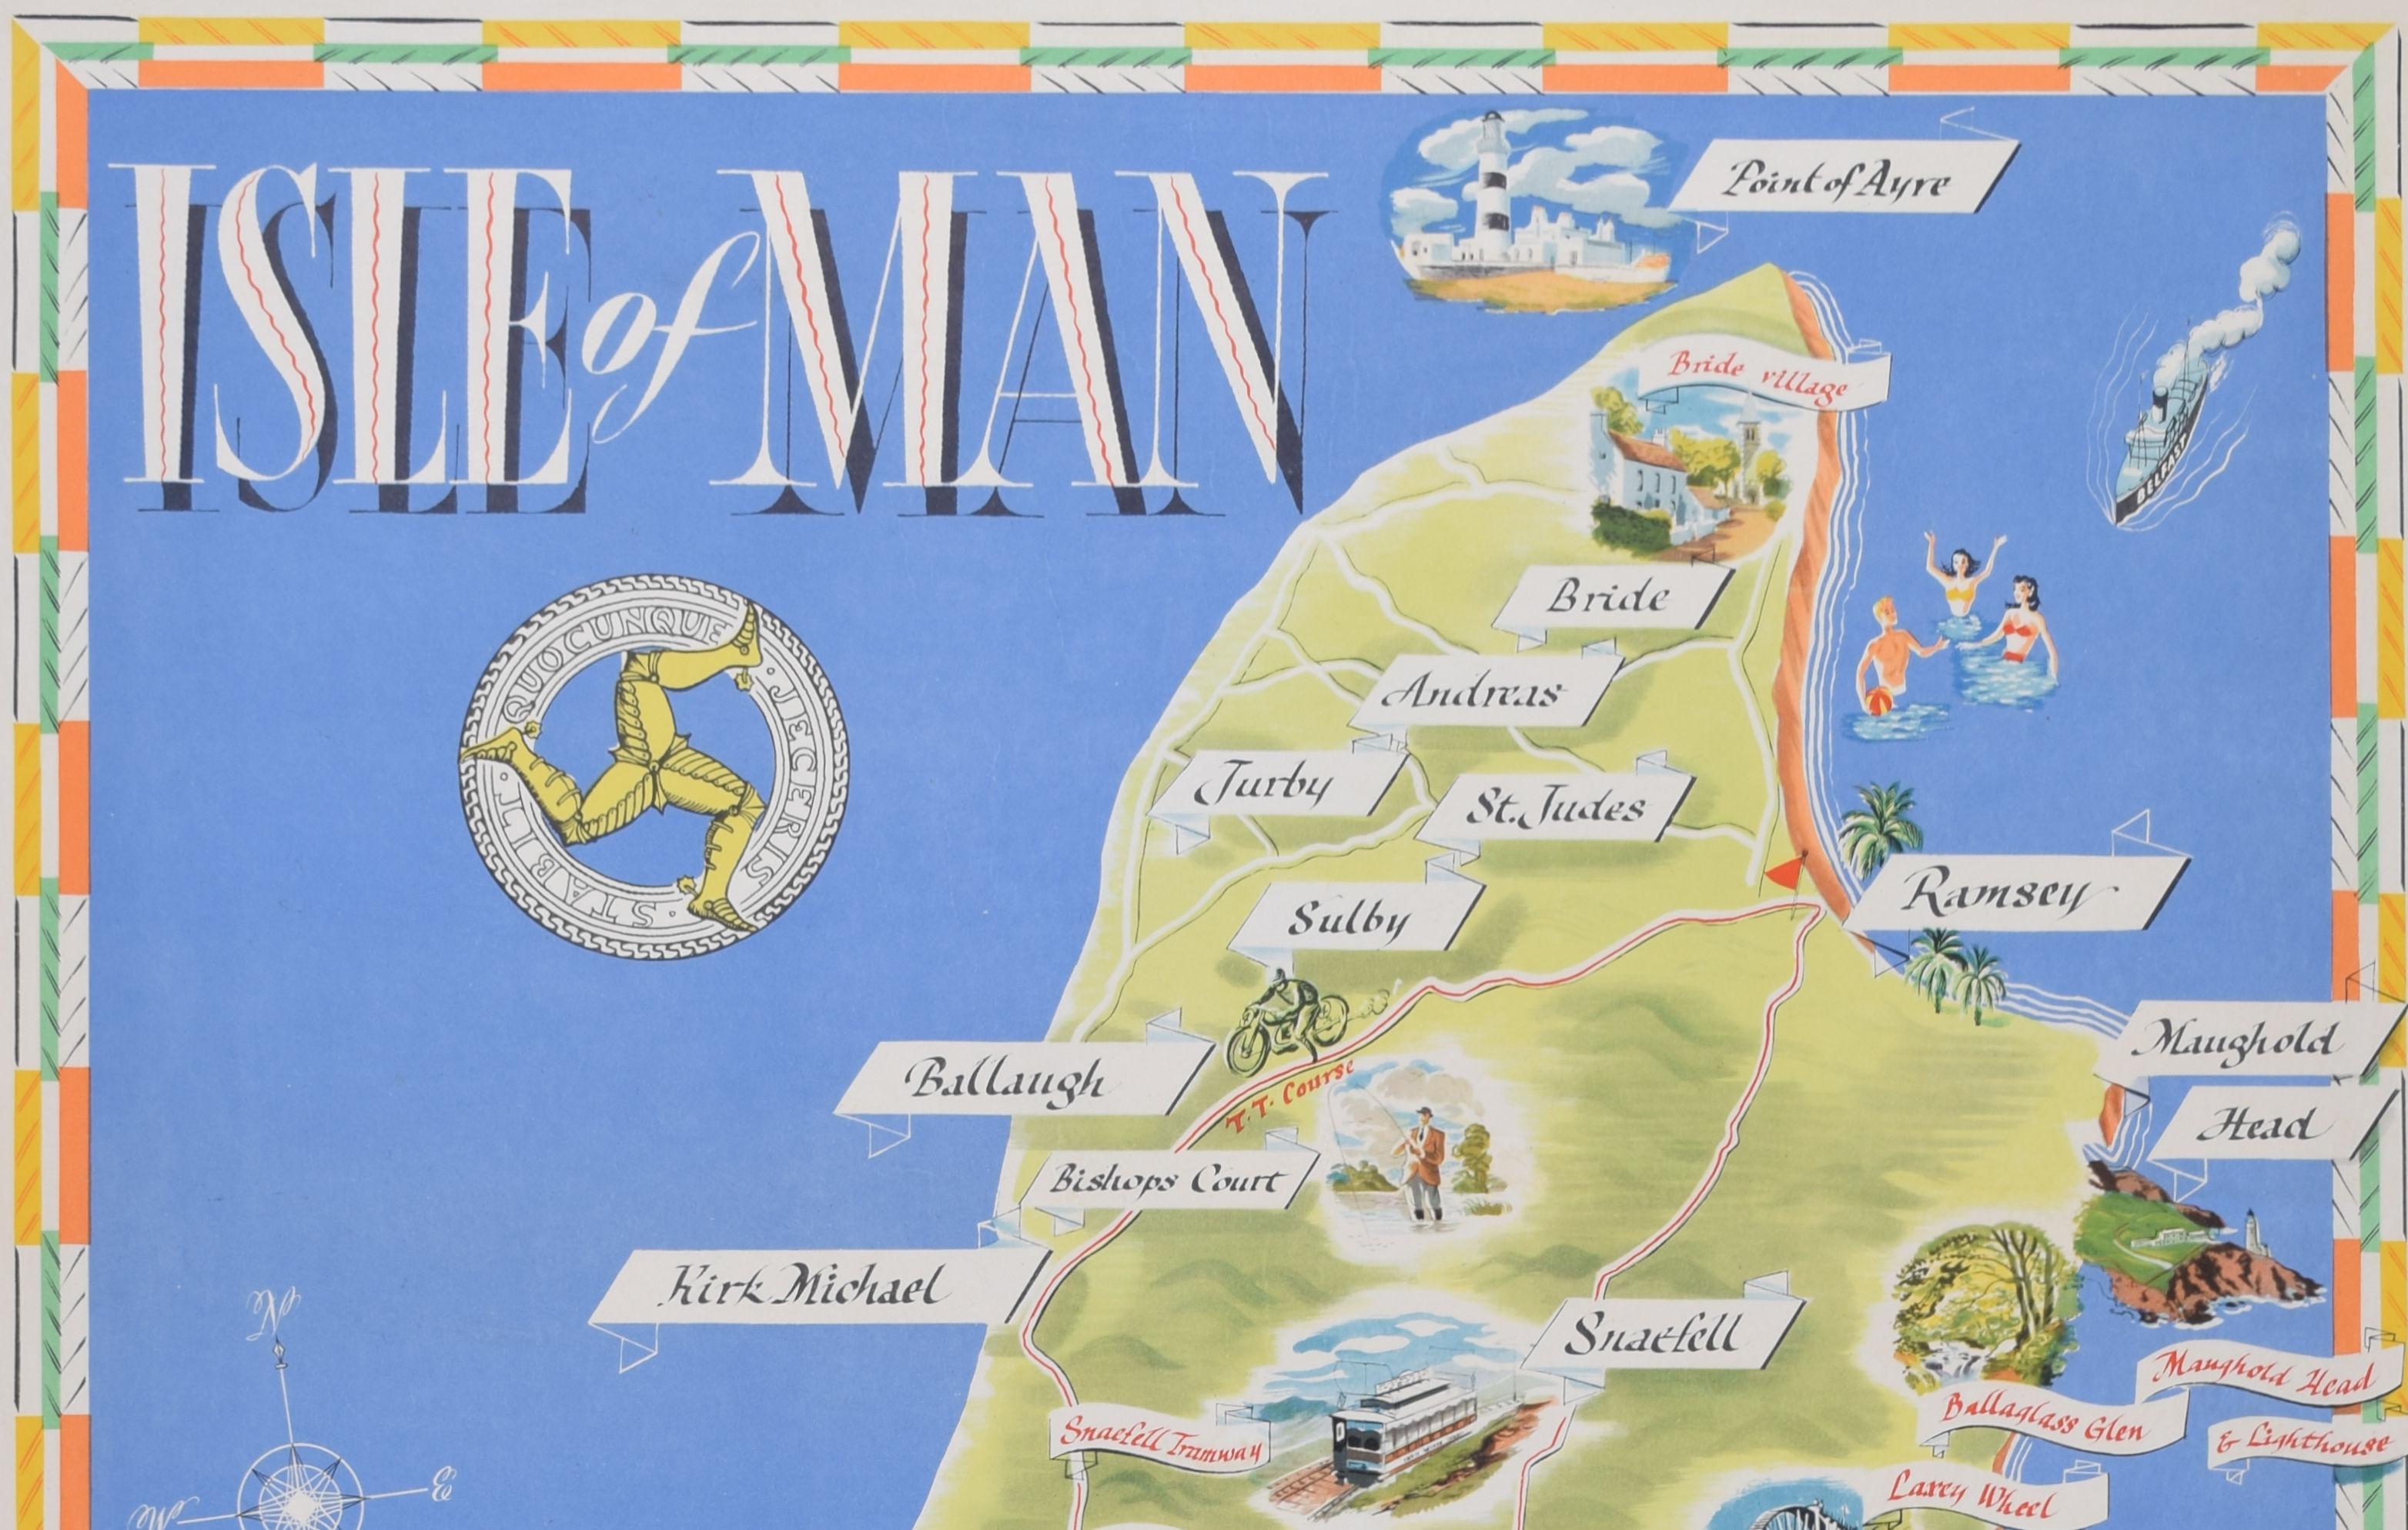 Isle of Man original vintage poster by Gordon Davey For Sale 1